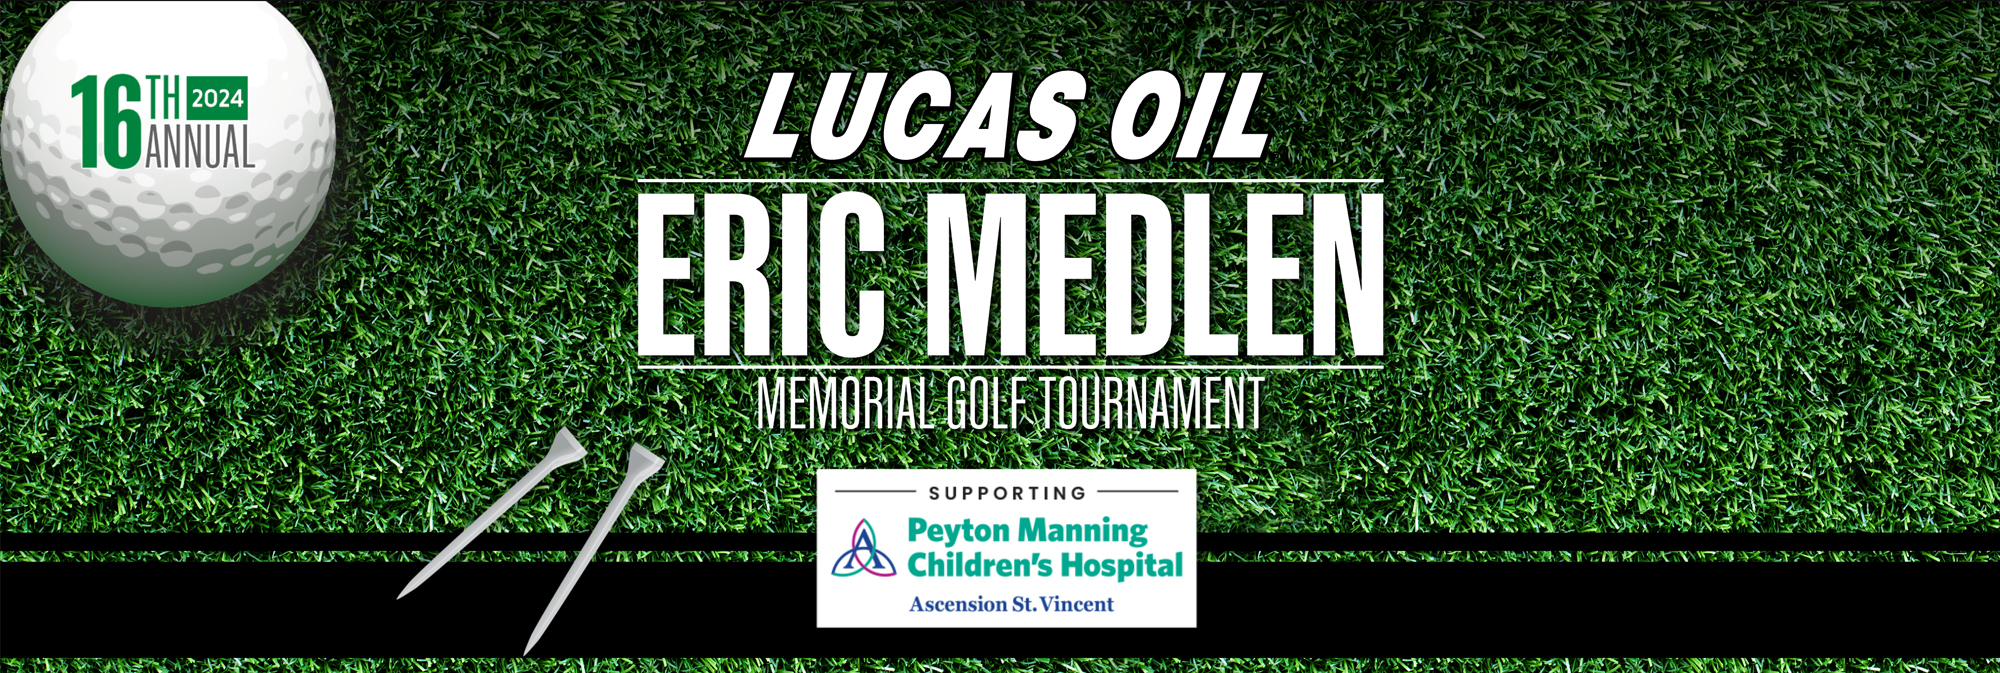 Lucas Oil Opens Registration for 16th Annual Eric Medlen Memorial Golf Tournament